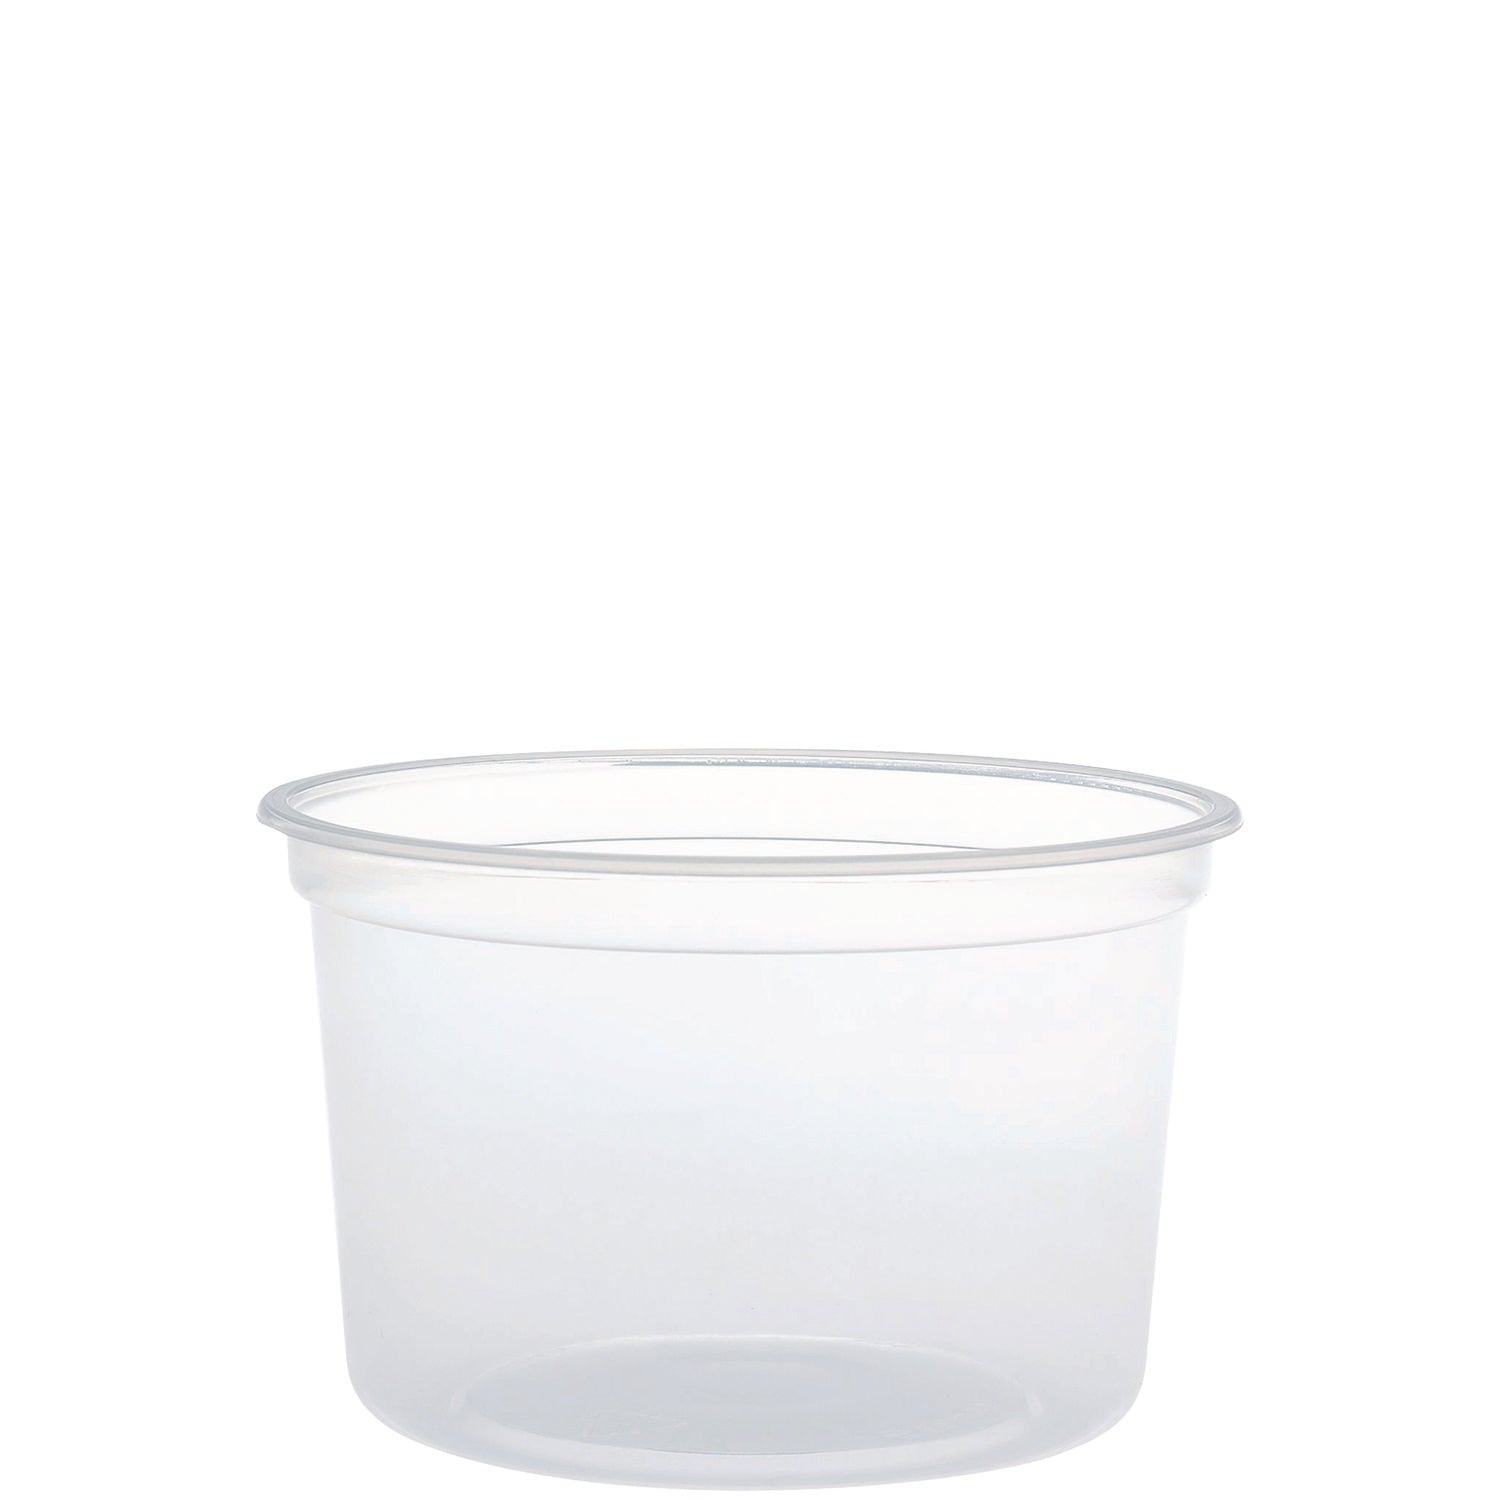 microgourmet-food-container-16-oz-translucent-plastic-50-pack-10-packs-carton_dccmn160100 - 1